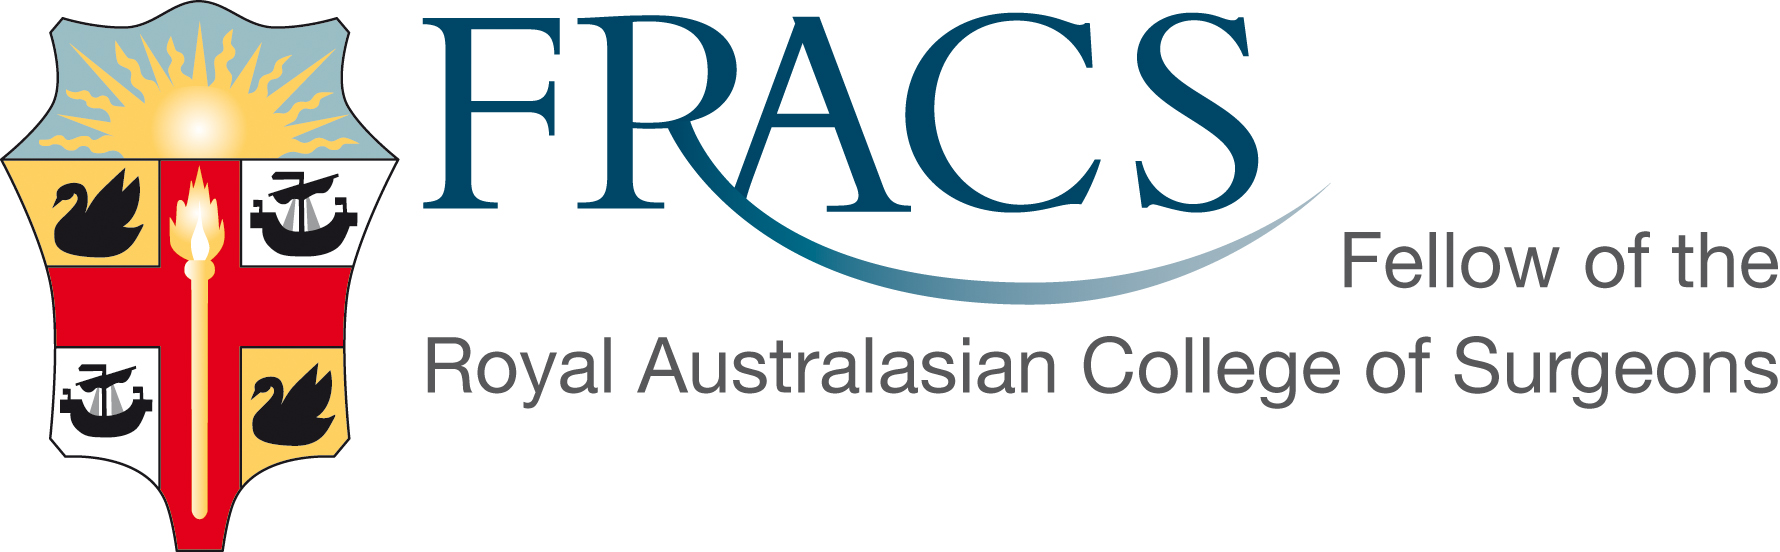 FRACS Fellow of the Royal Australasian College of Suregons Logo